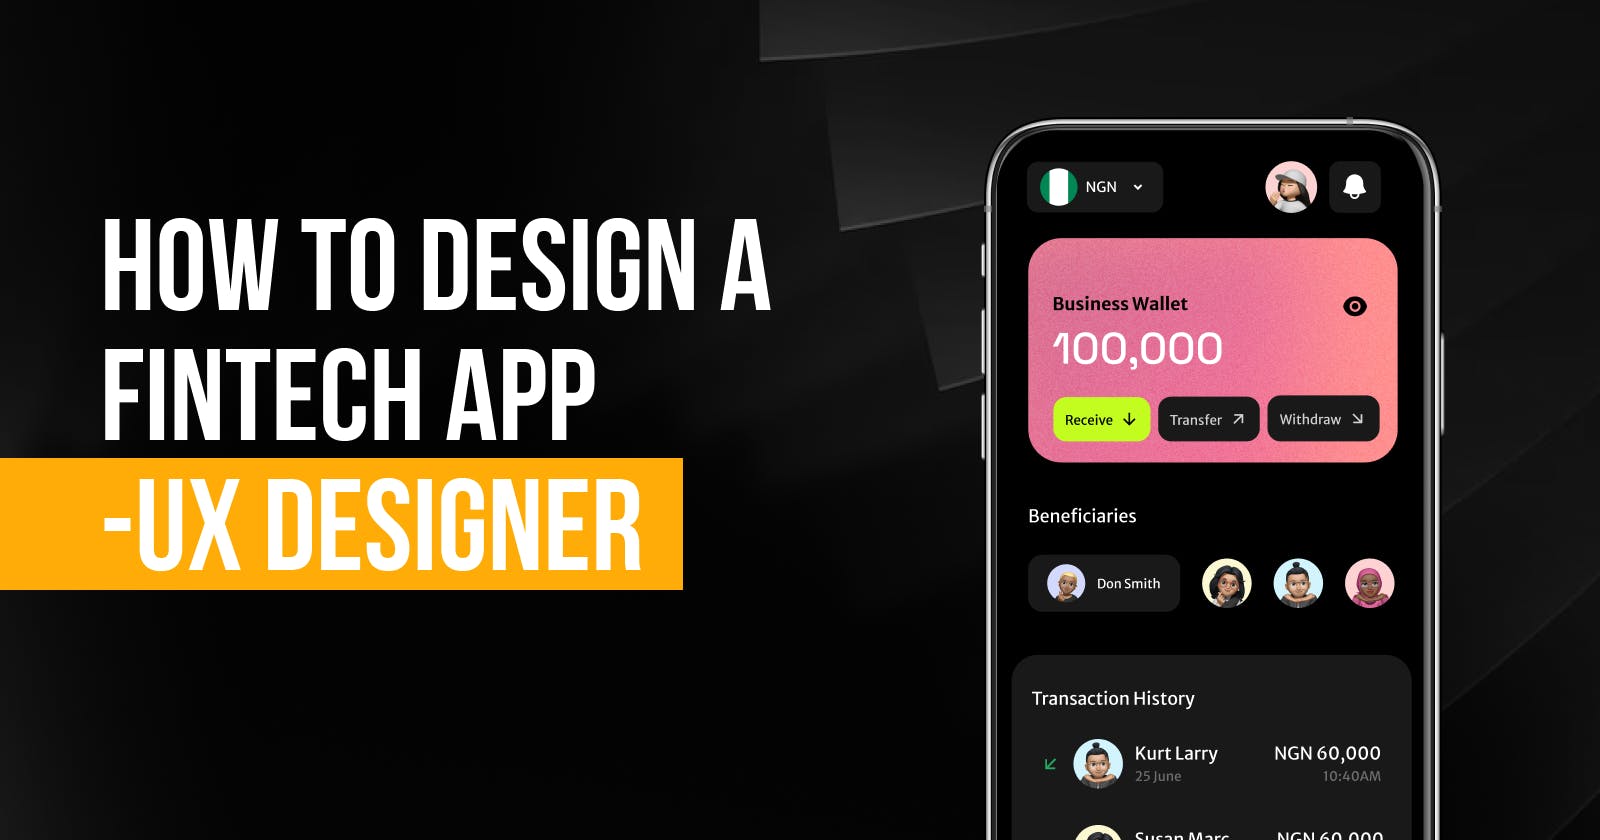 How To Design a Fintech App - (UX Designer)